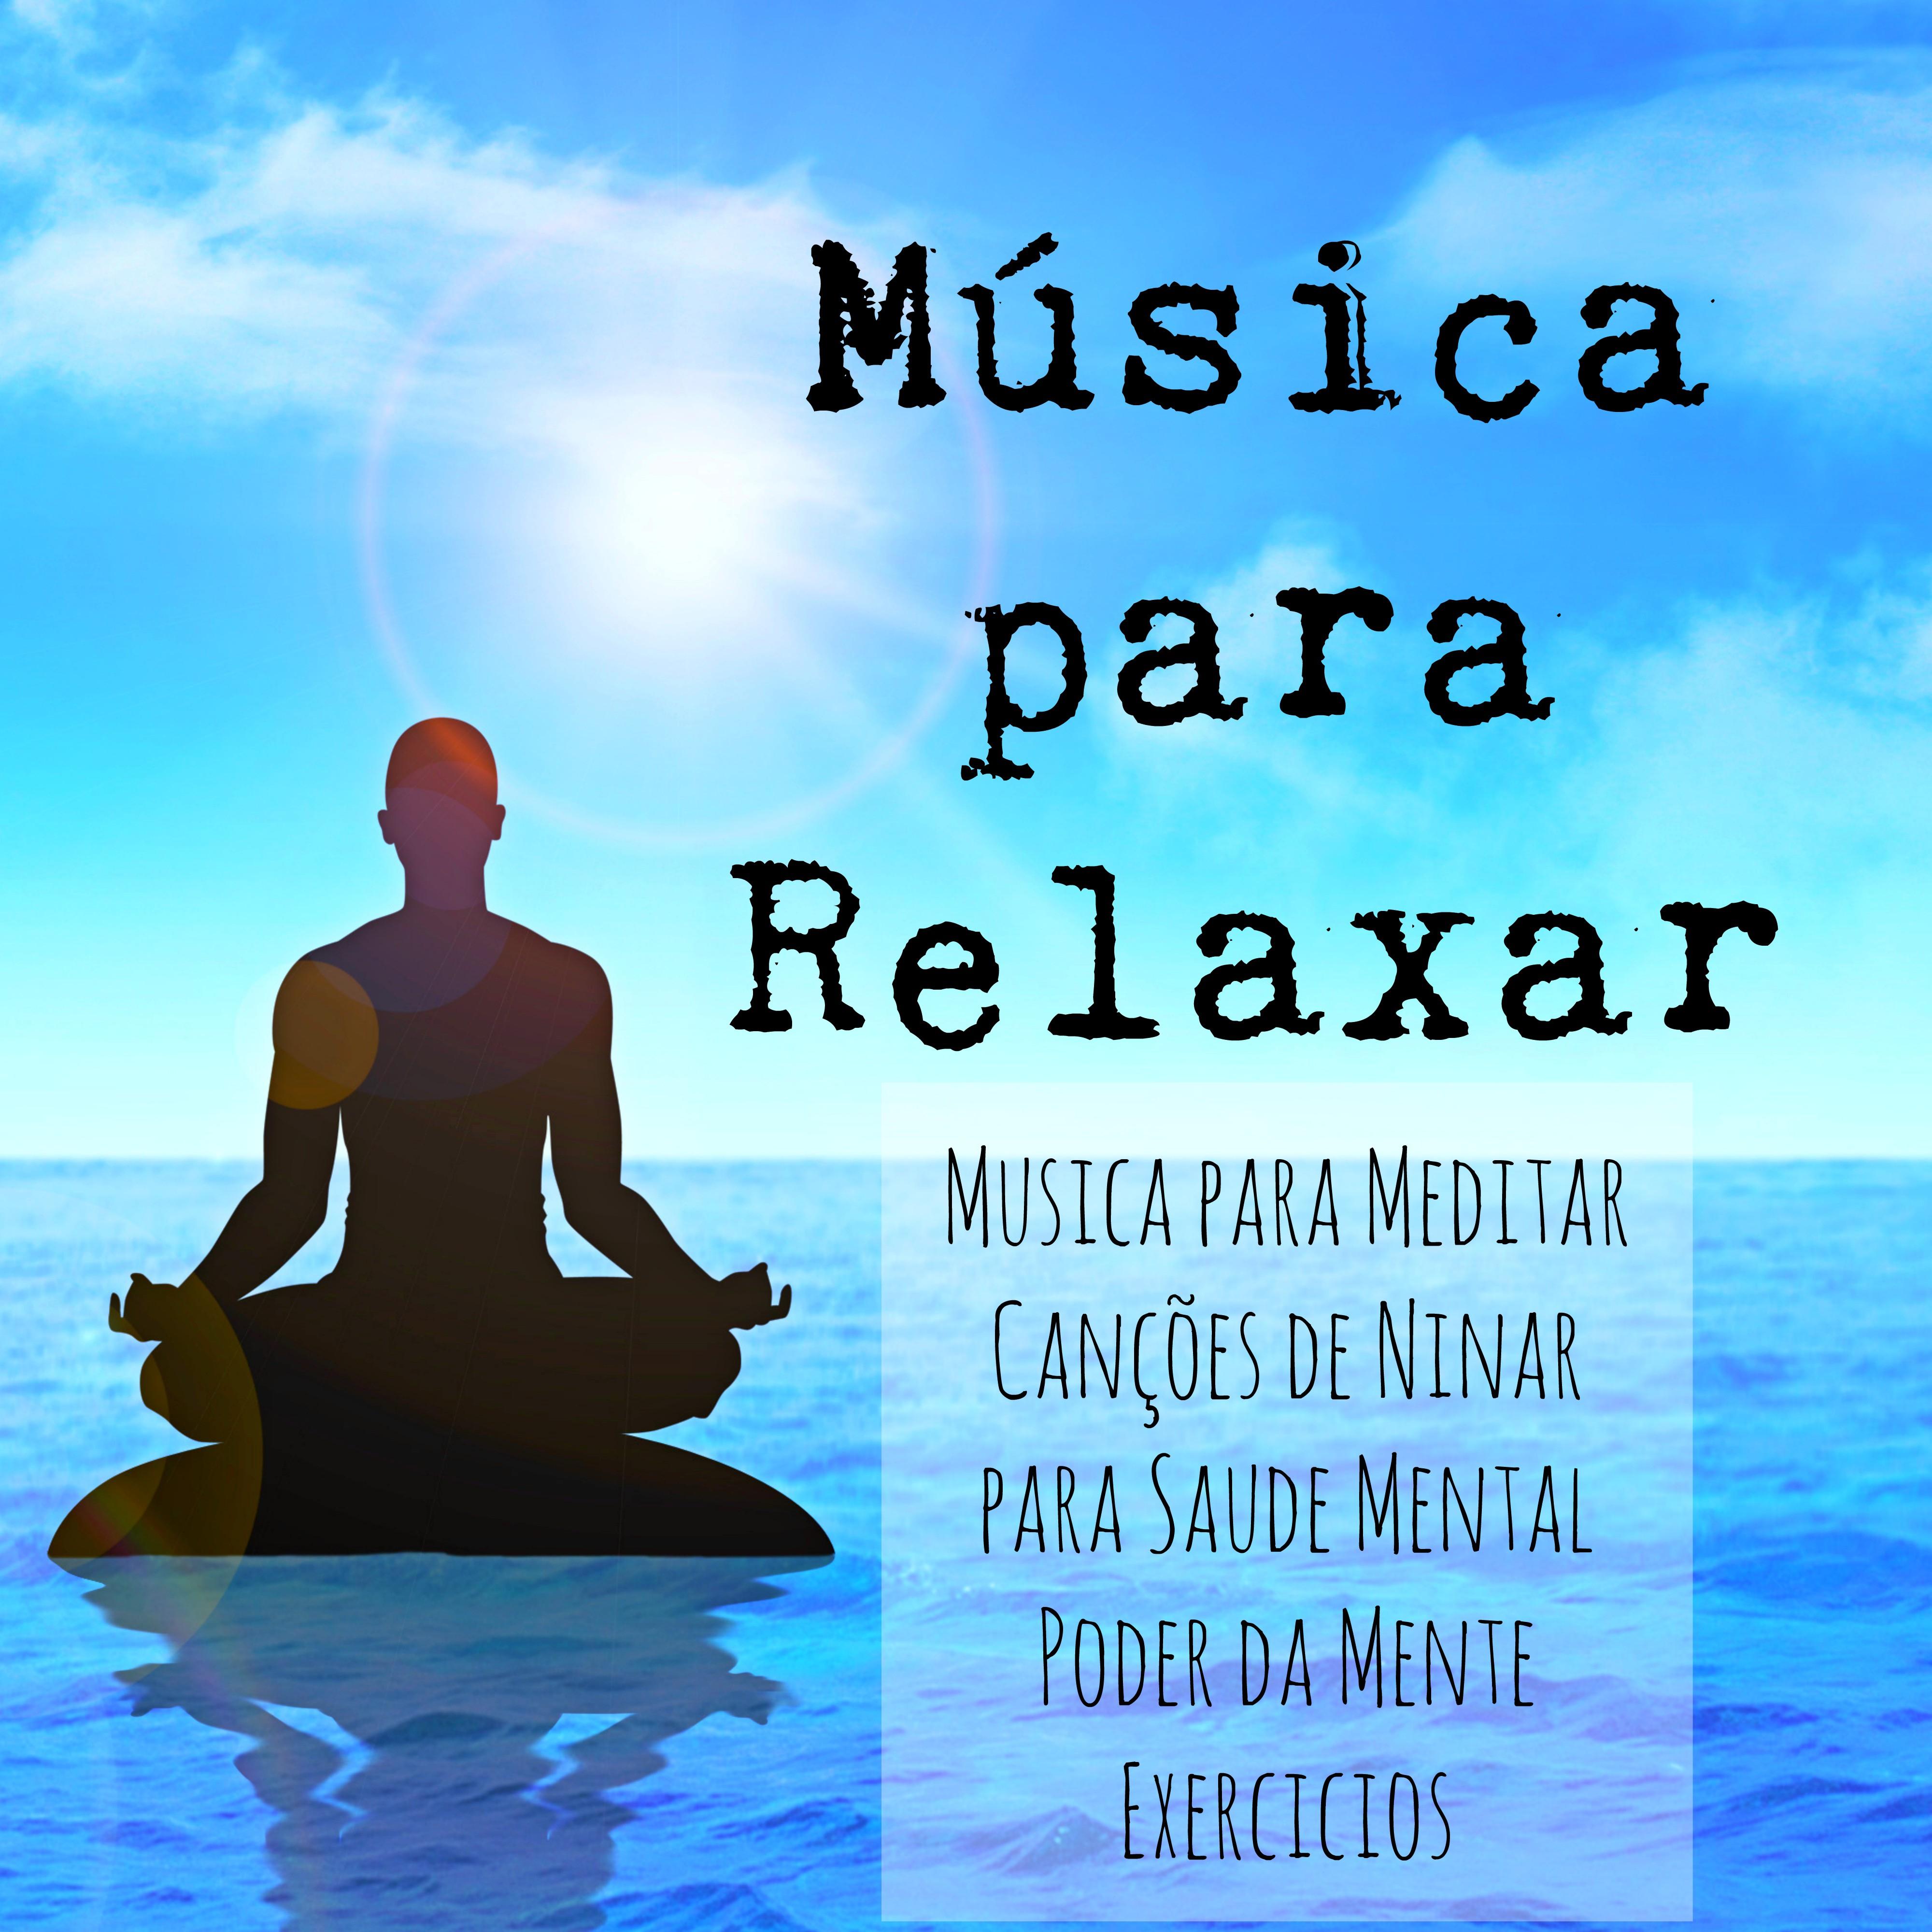 Música para Relaxar - Musica para Meditar Canções de Ninar para Saude Mental Poder da Mente Exercicios con Sons Doces Instrumentais da Natureza